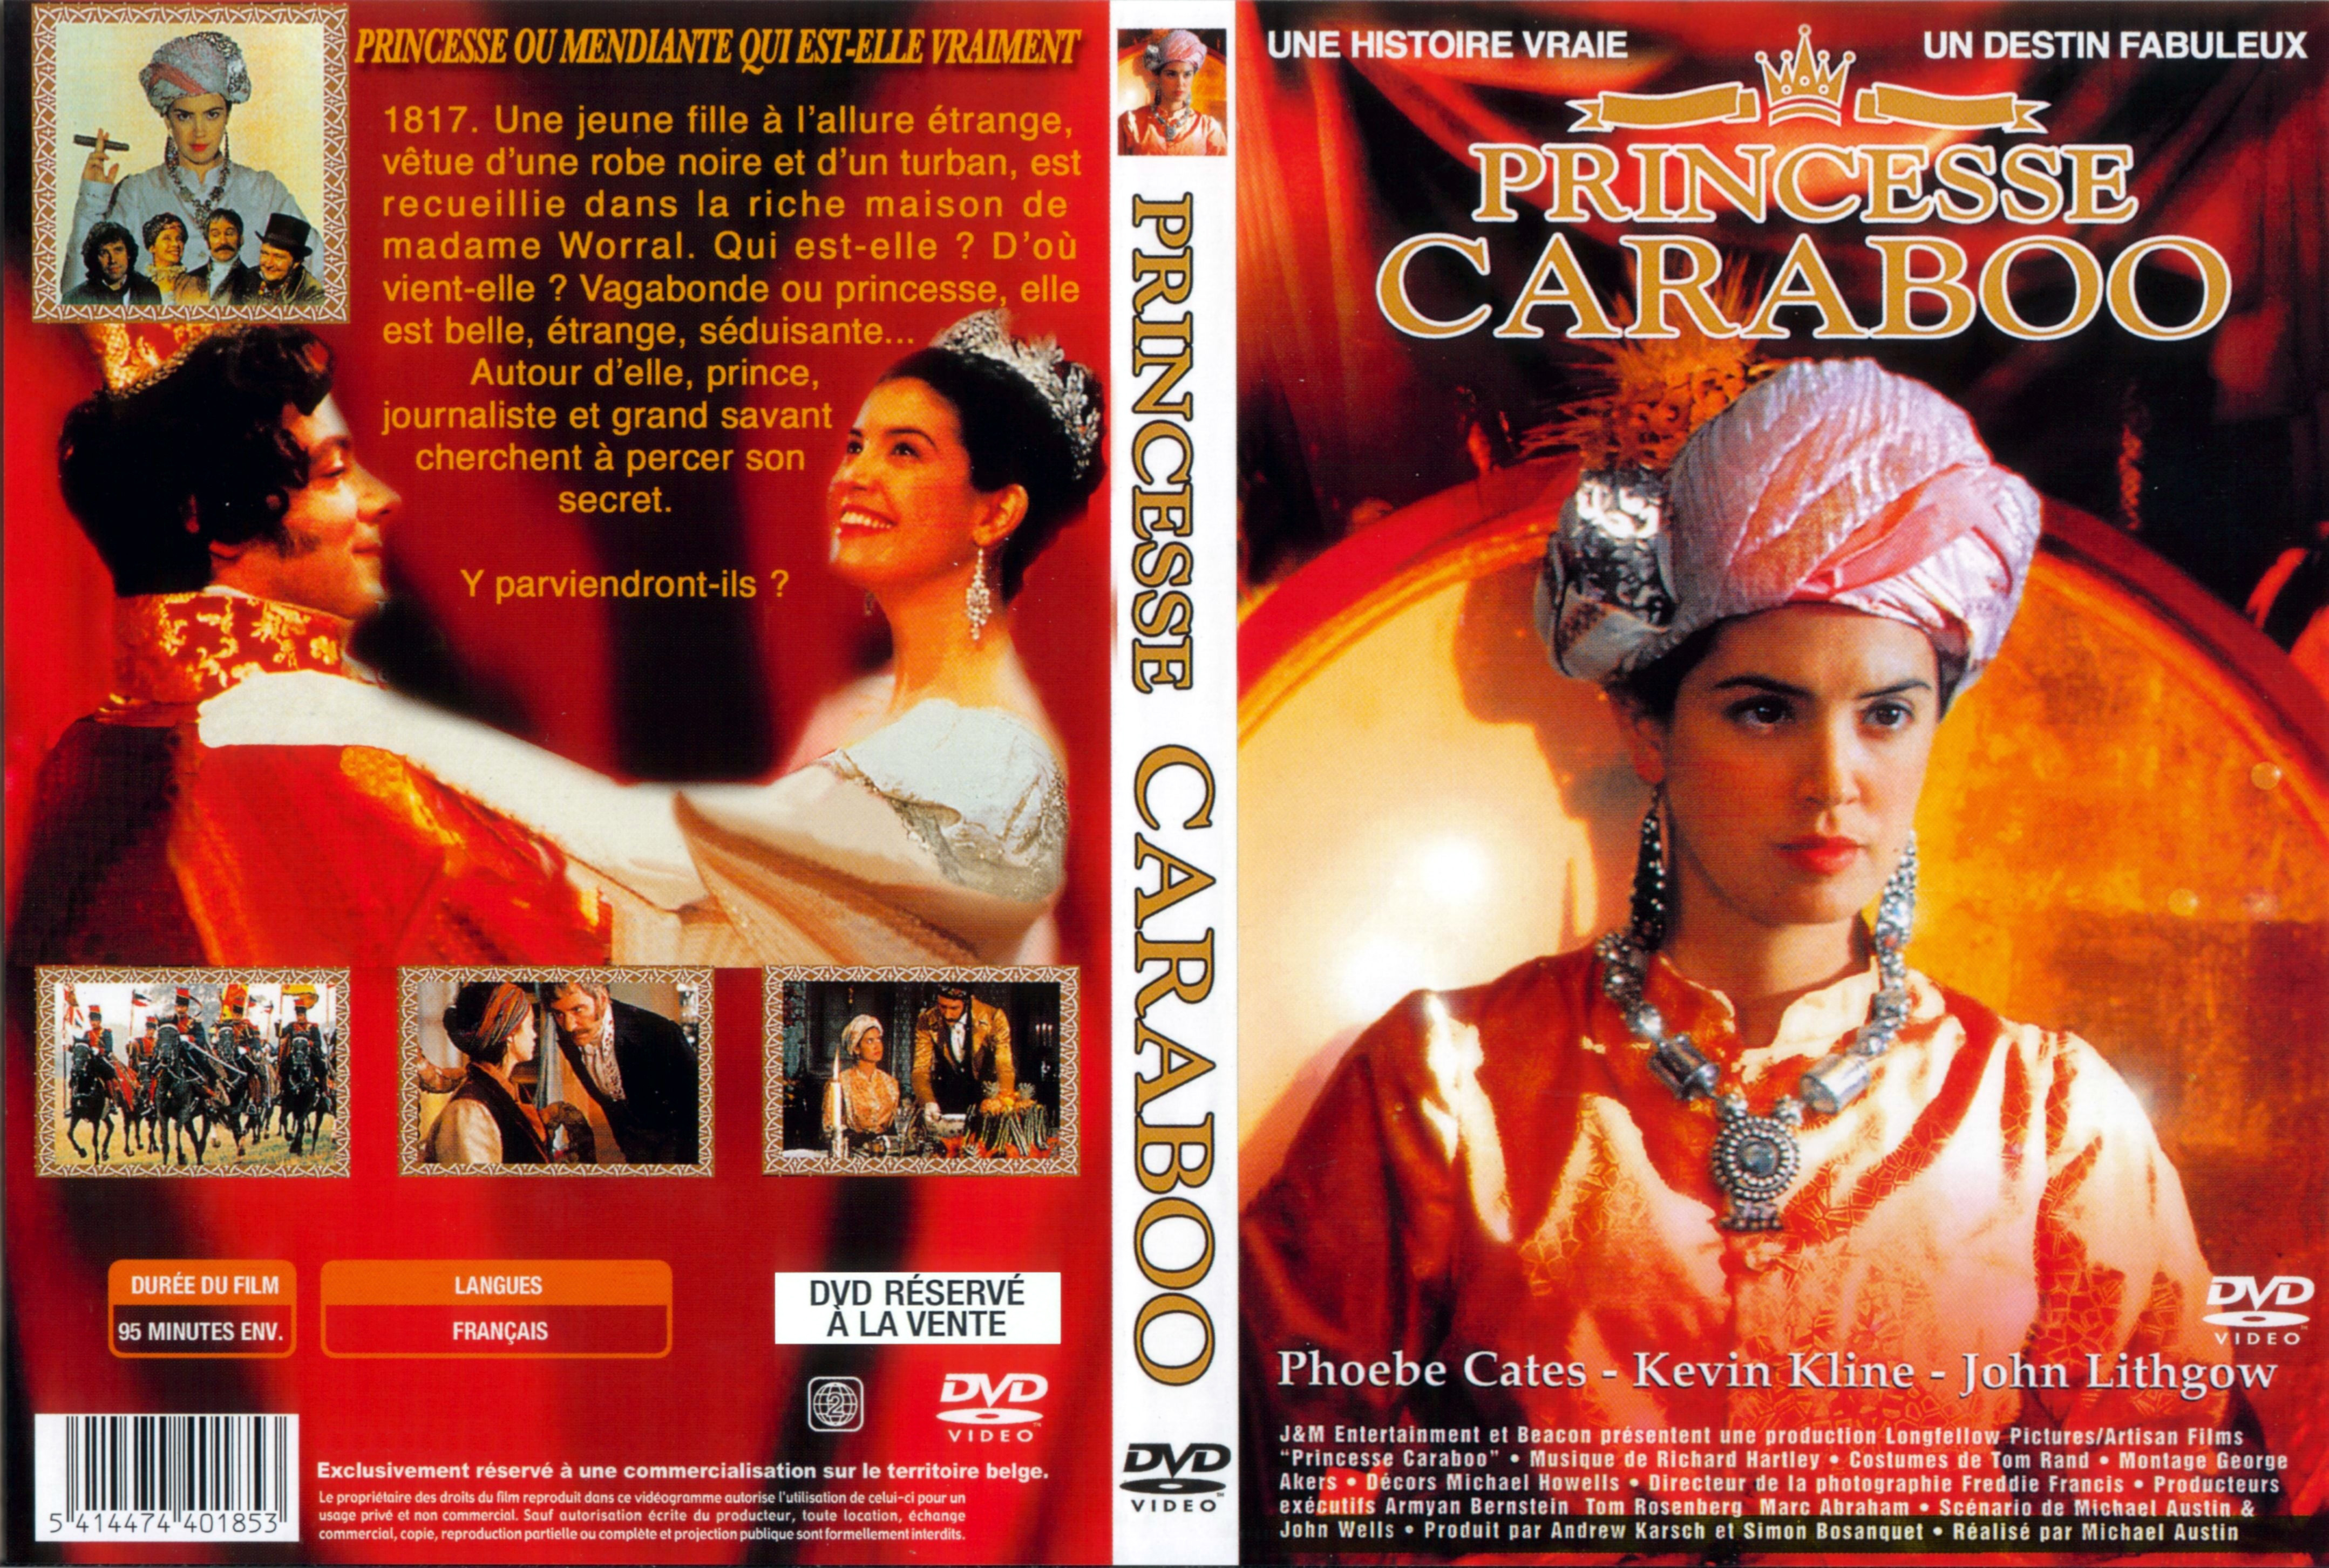 Jaquette DVD Princesse Caraboo